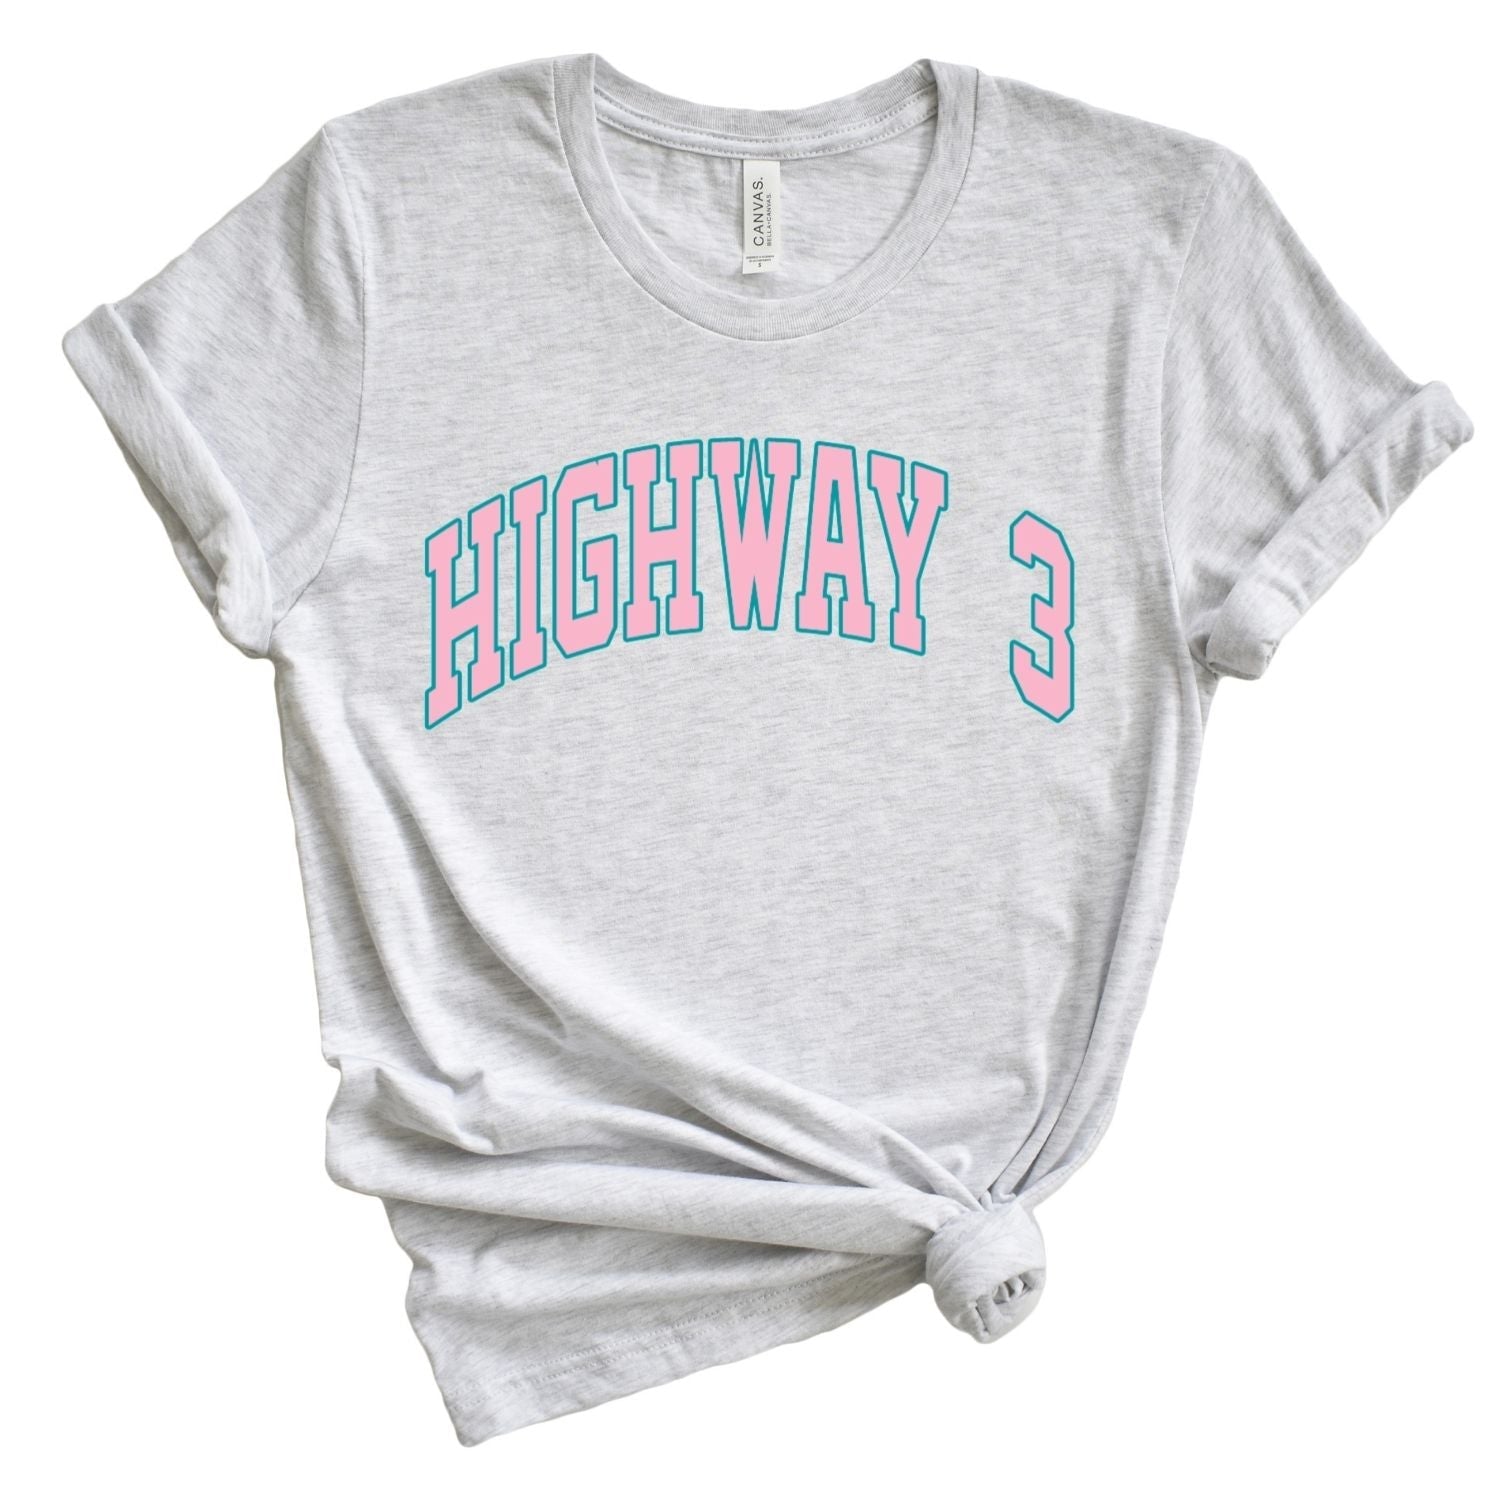 Highway 3 Graphic Tee - Ash/Pink-Teal